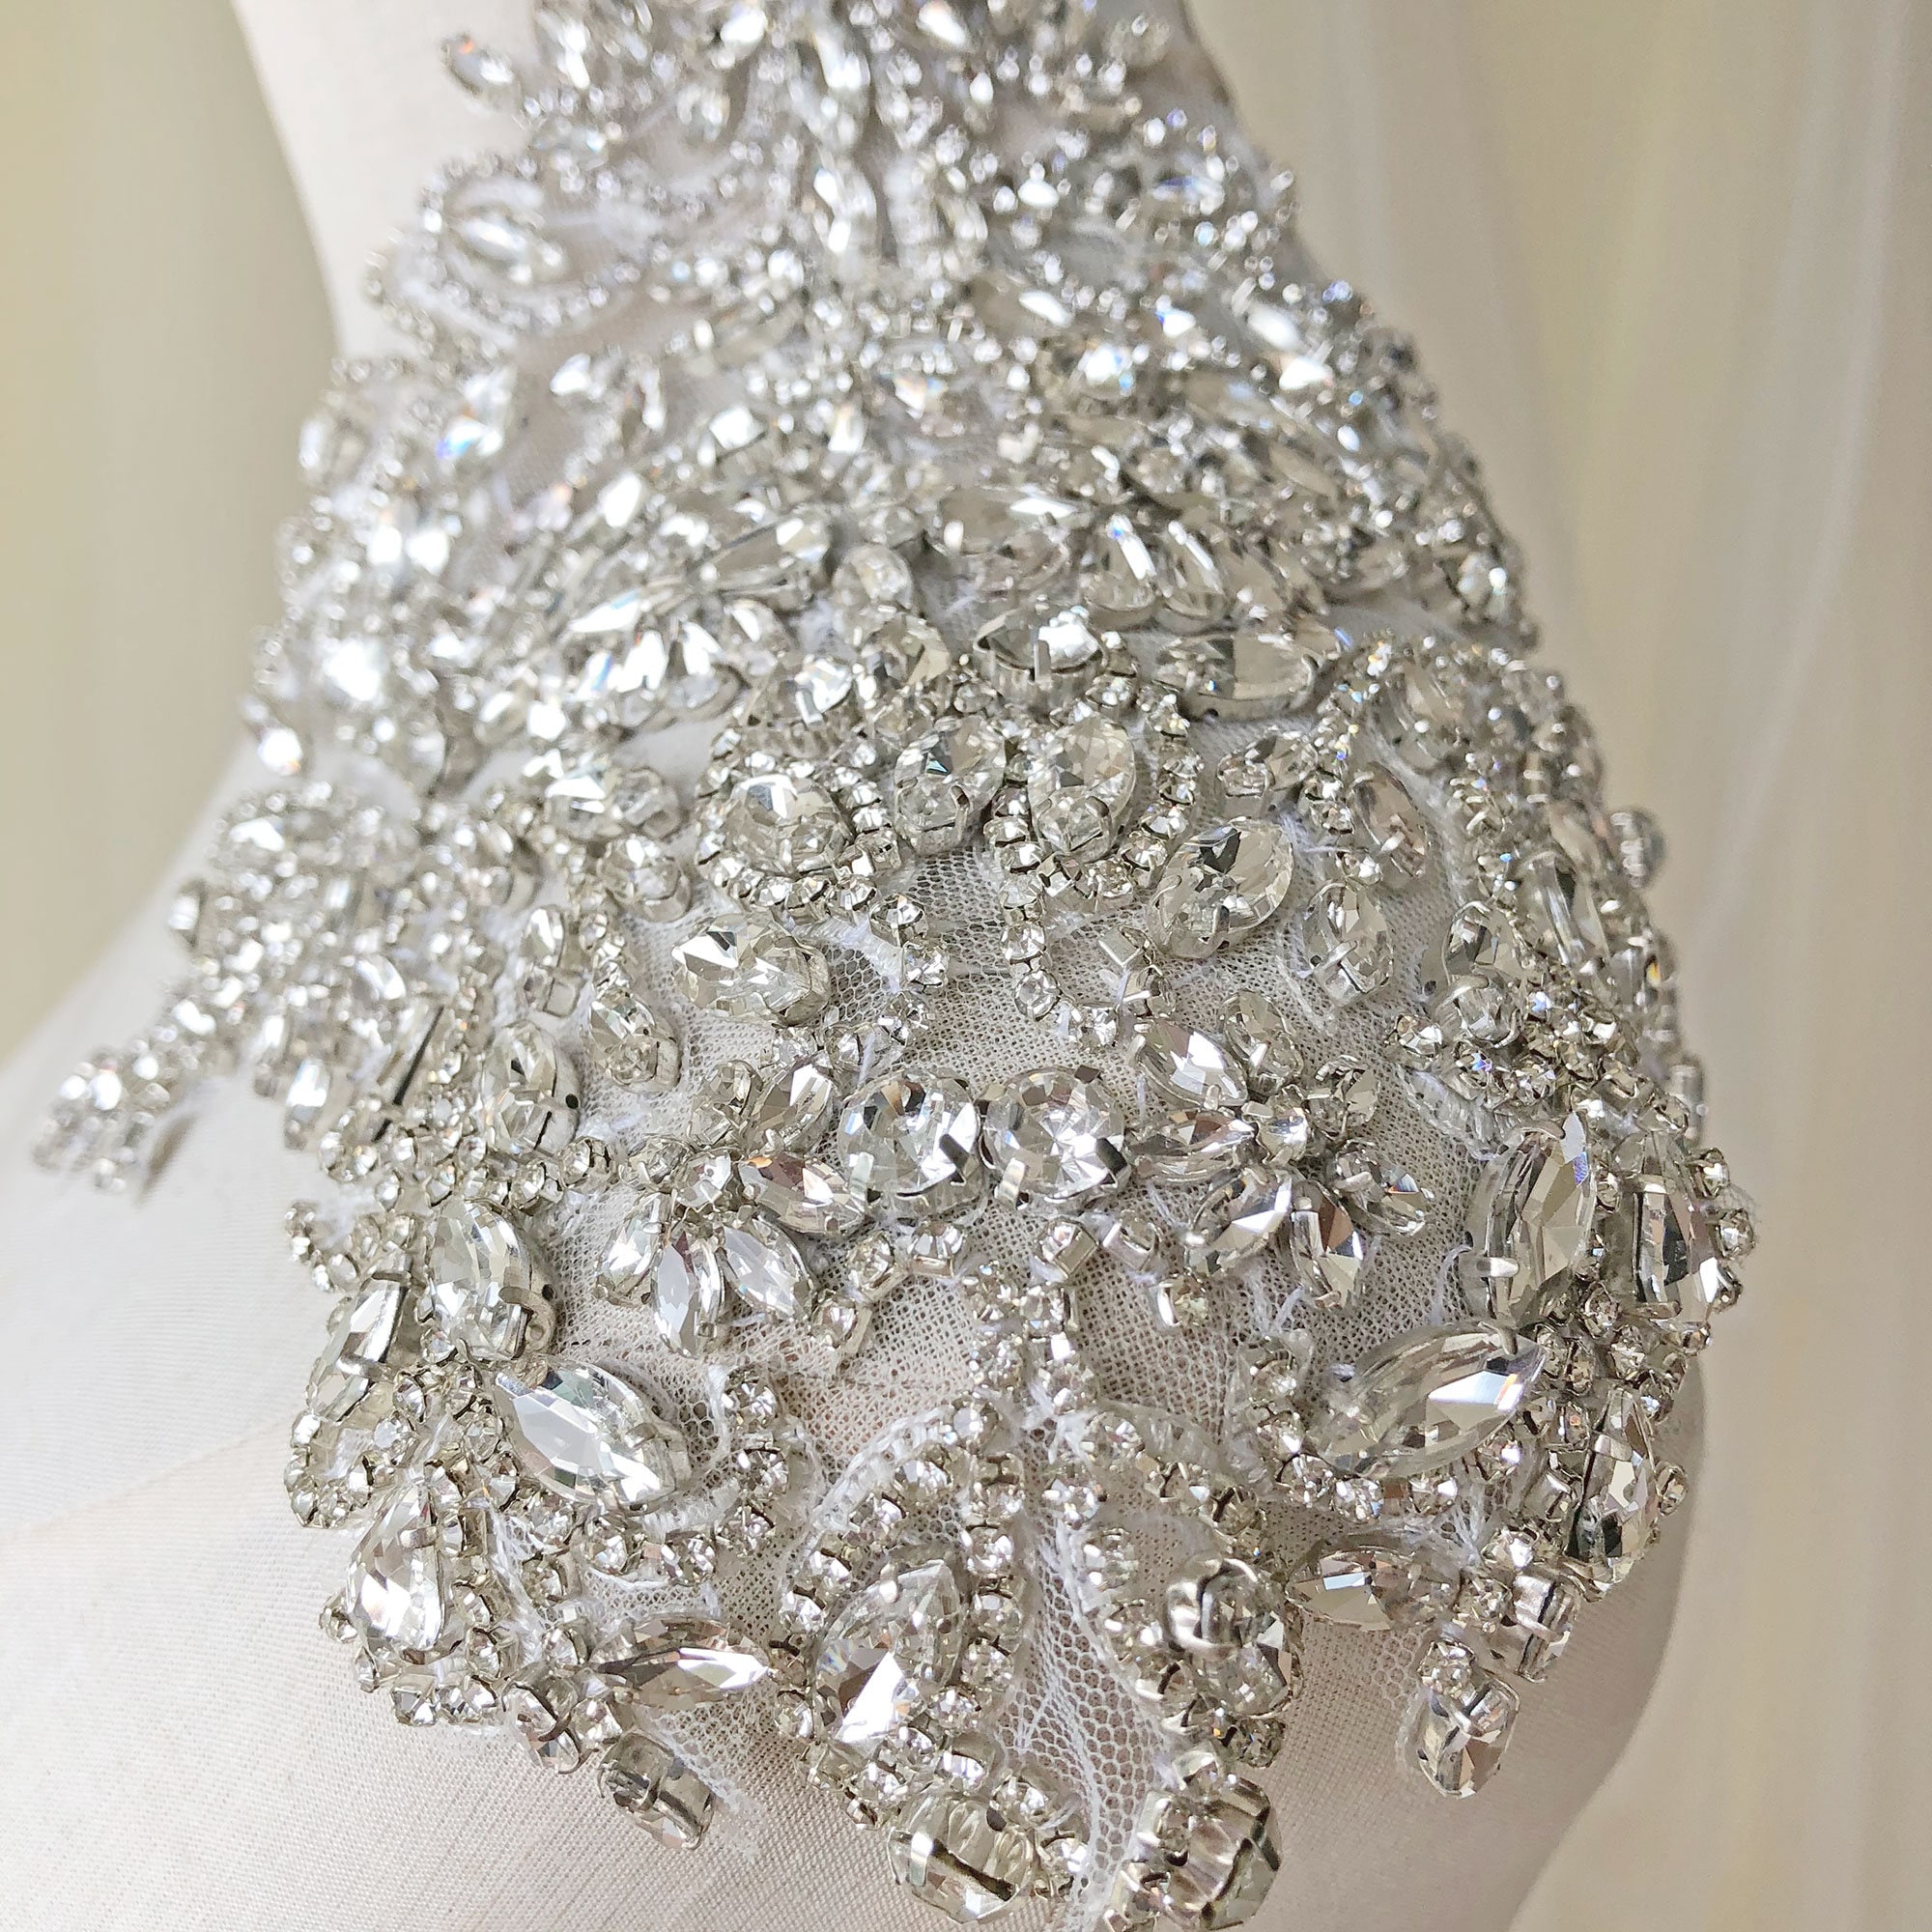 The Recycled Spandex Ghulam Mini-dress with Swarovski Hotfix Crystal